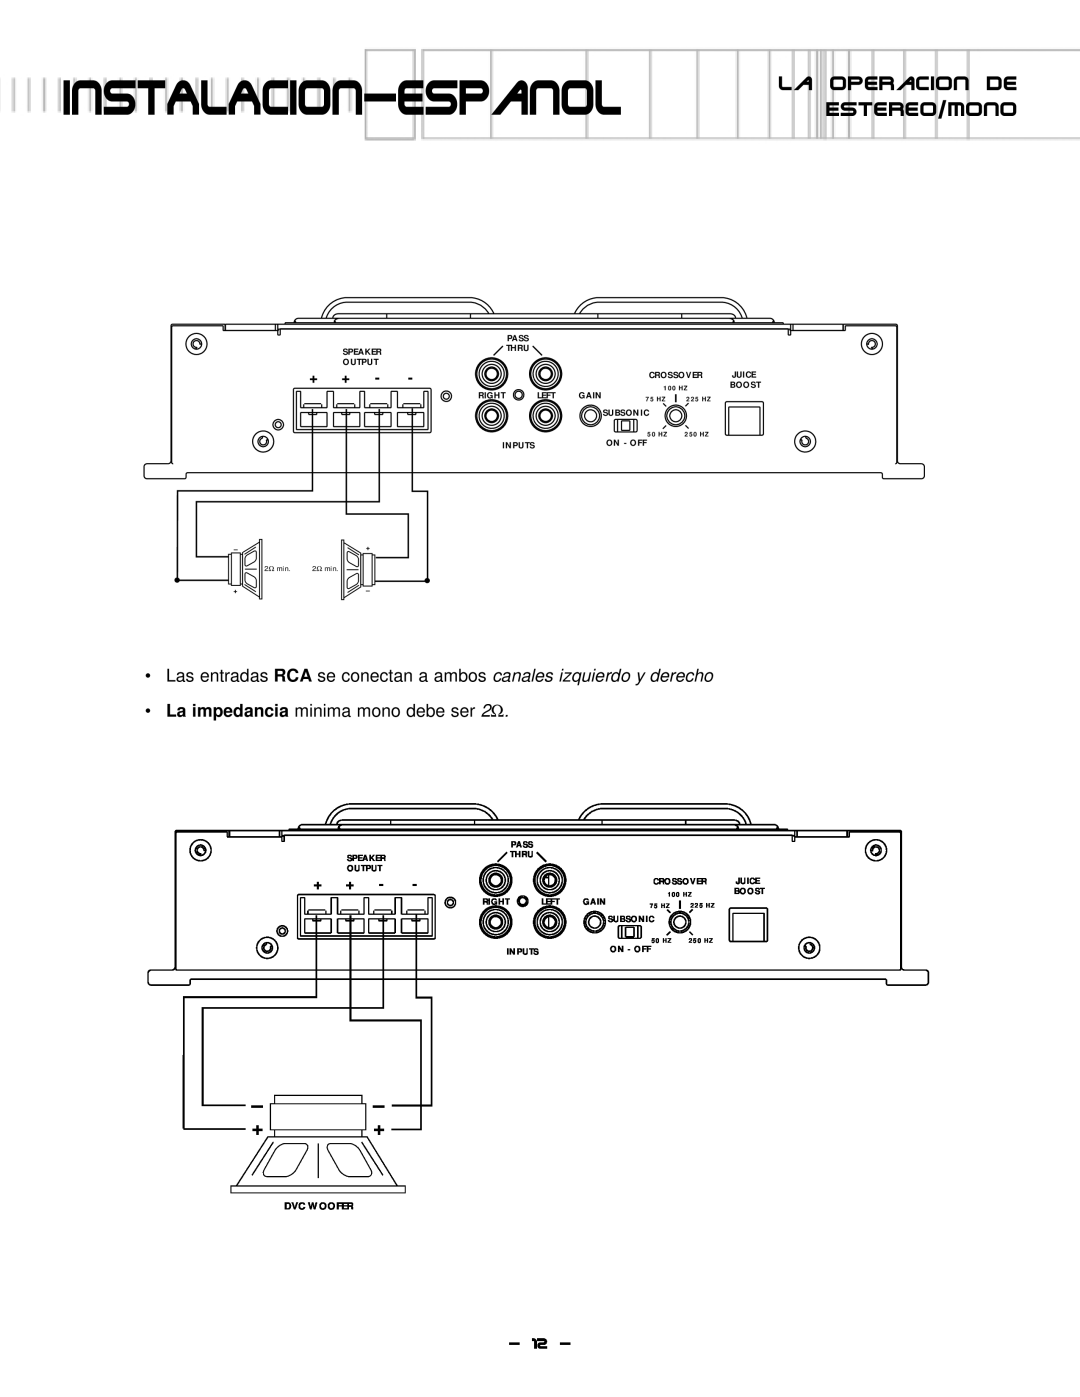 Lightning Audio S1.600D, S1.1000D manual InstAlAcion-espanol Estereo/Mono, la operacion de, Dvc Woofer 